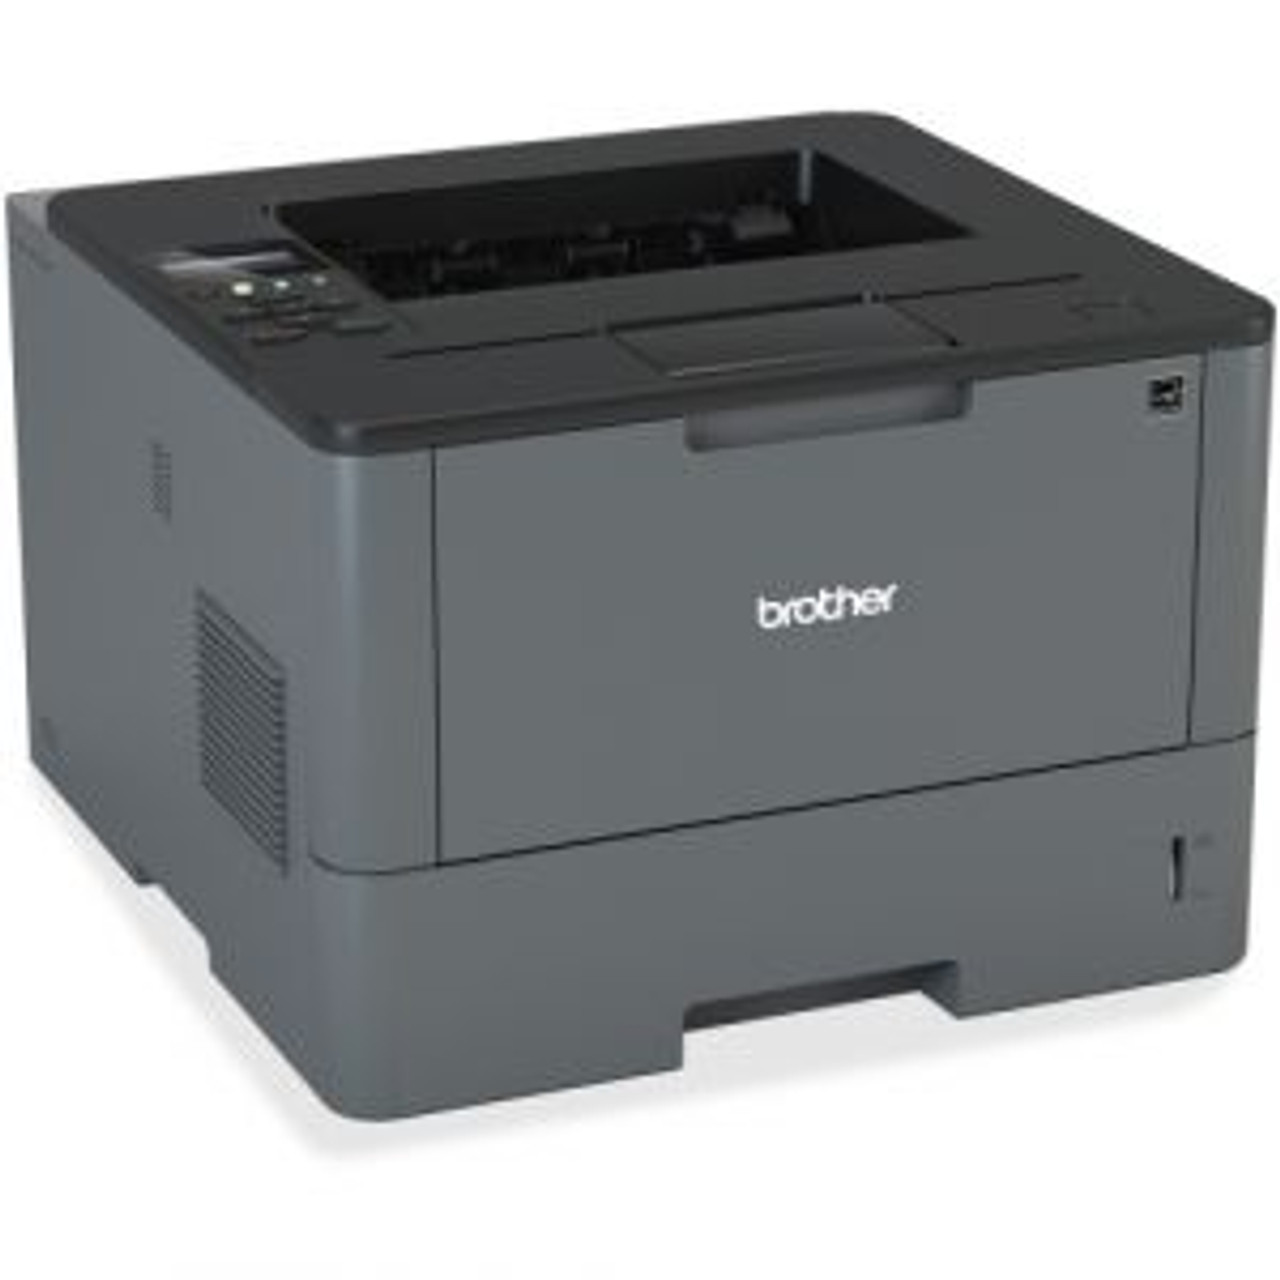 HLL5100DN Brother HL-L5100DN Laser Printer Monochrome 1